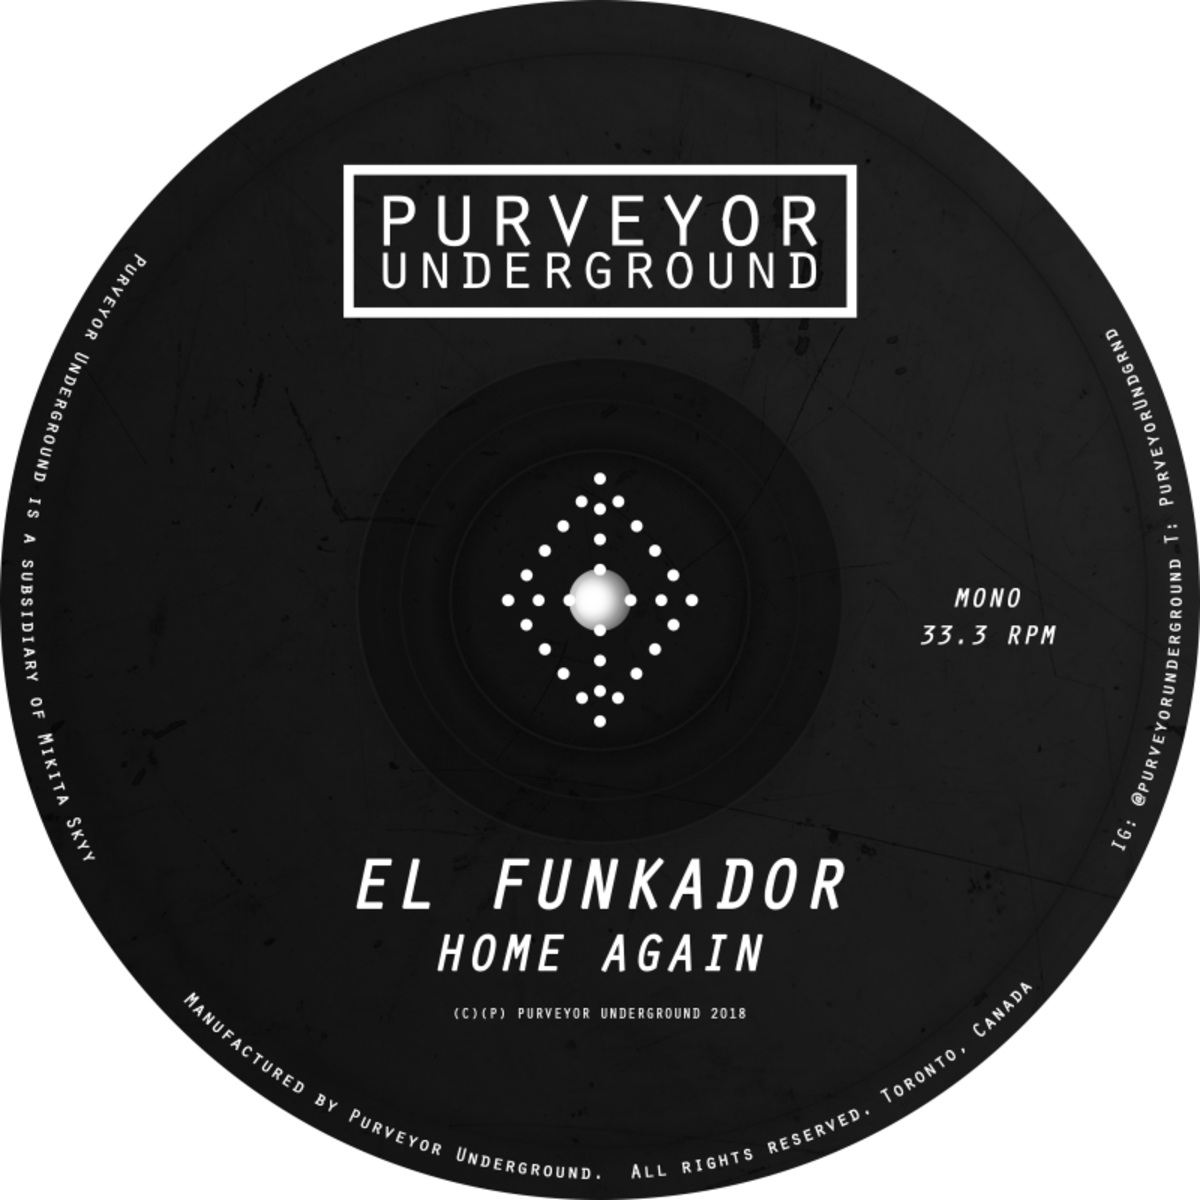 El Funkador - Home Again / Purveyor Underground